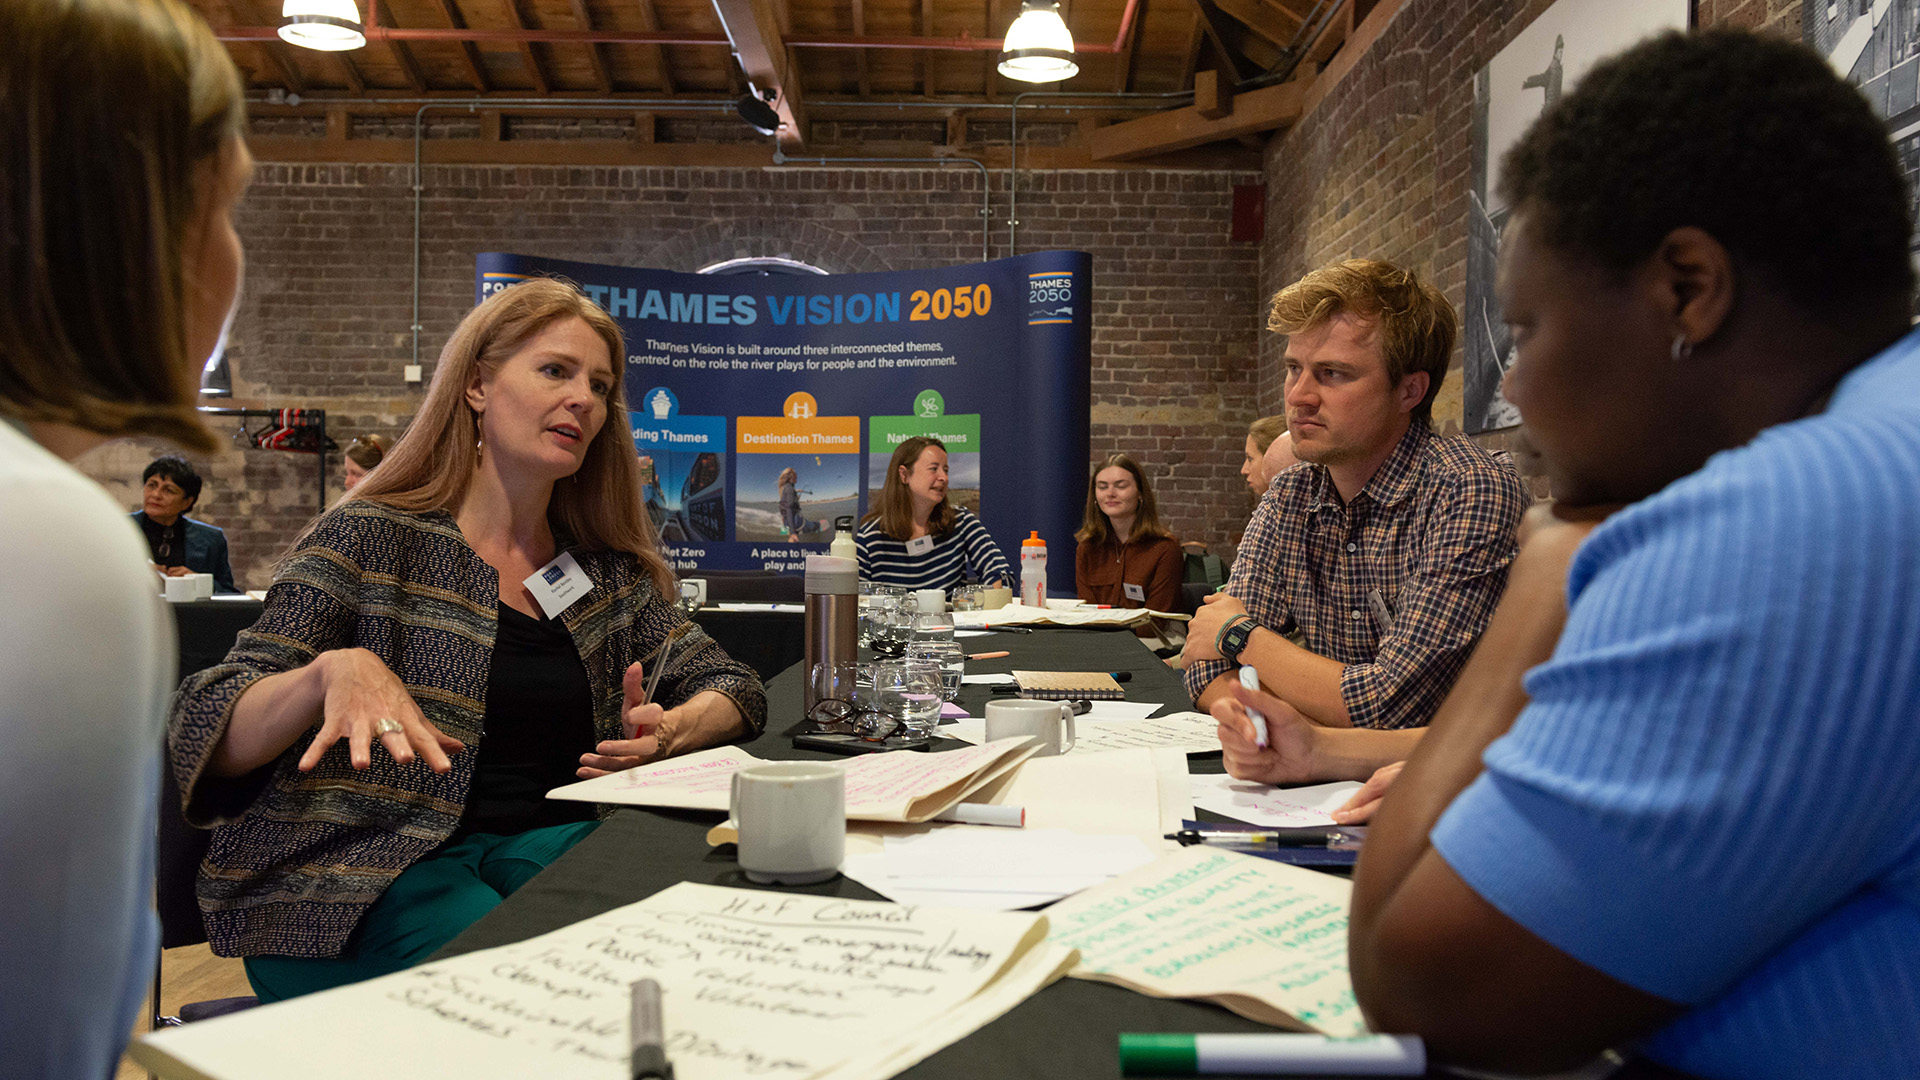 Workshop participants discuss litter on the Thames